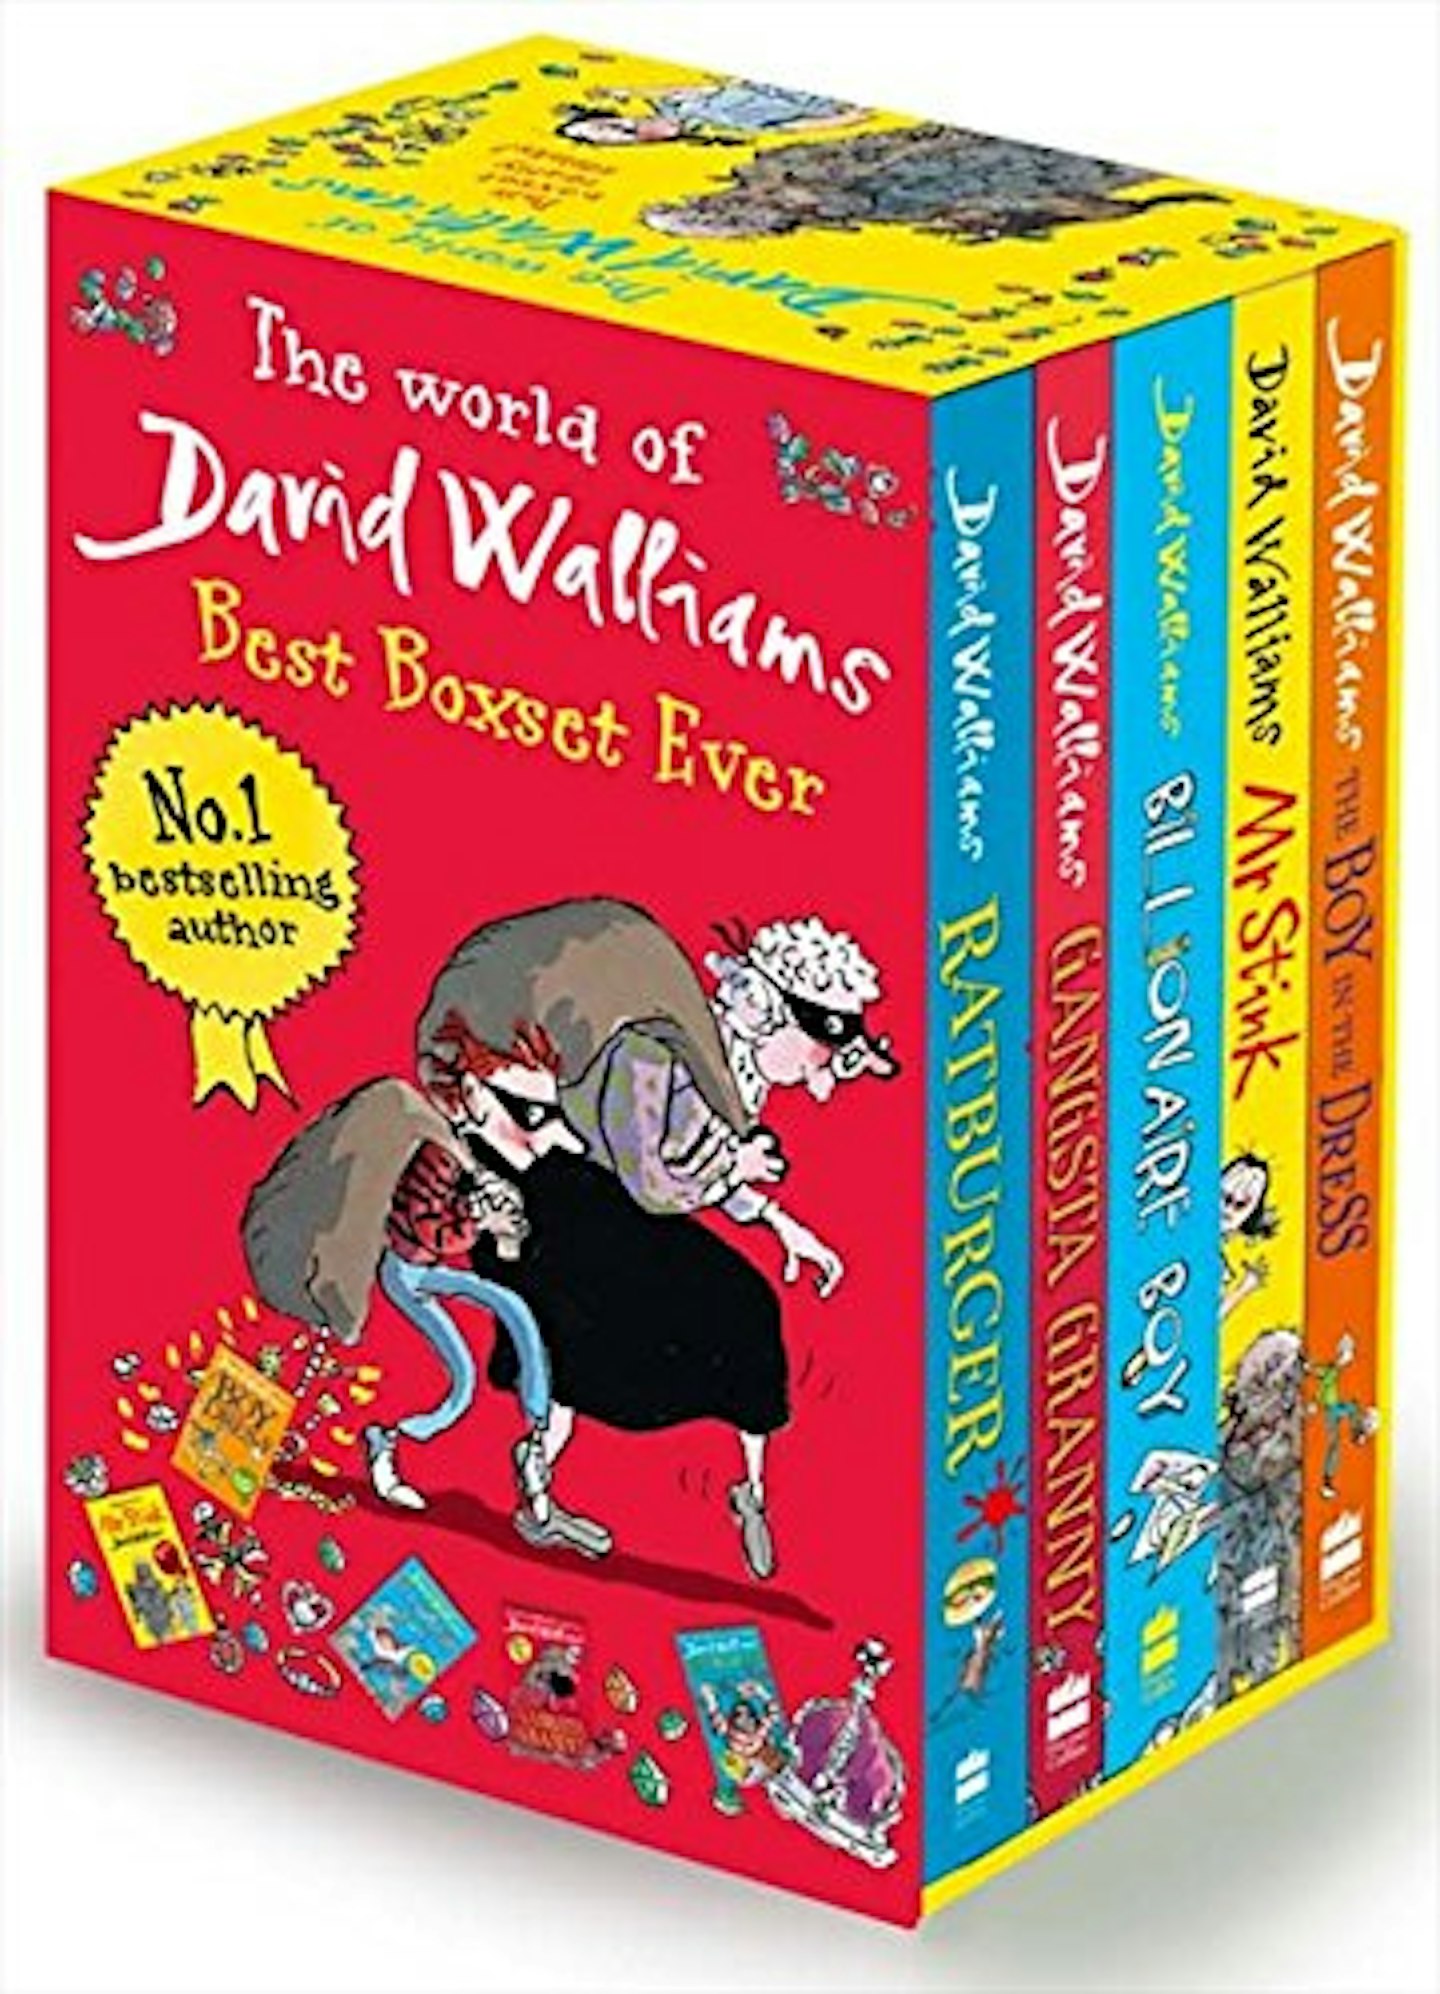 The world of David Walliams - Best Box Set Ever 